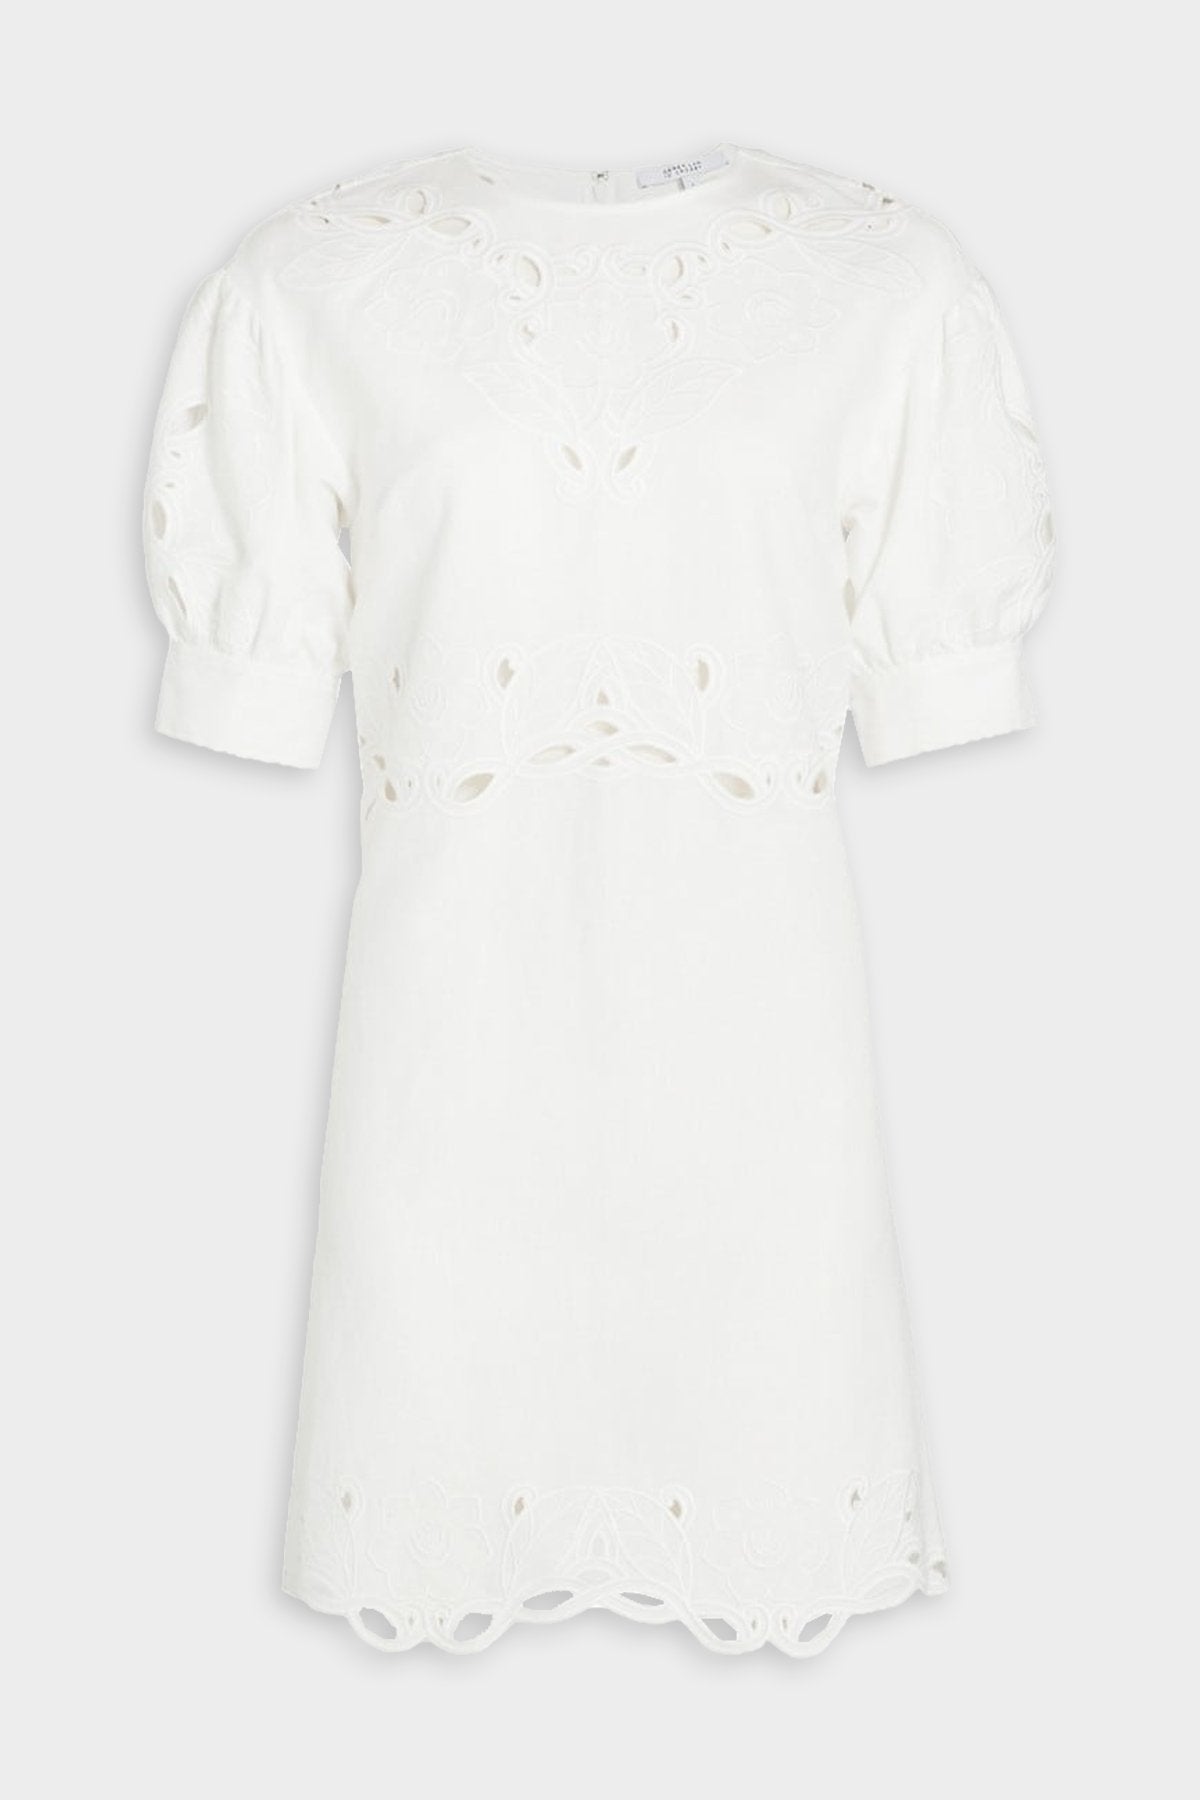 Everett Eyelet Dress in Soft White - shop-olivia.com